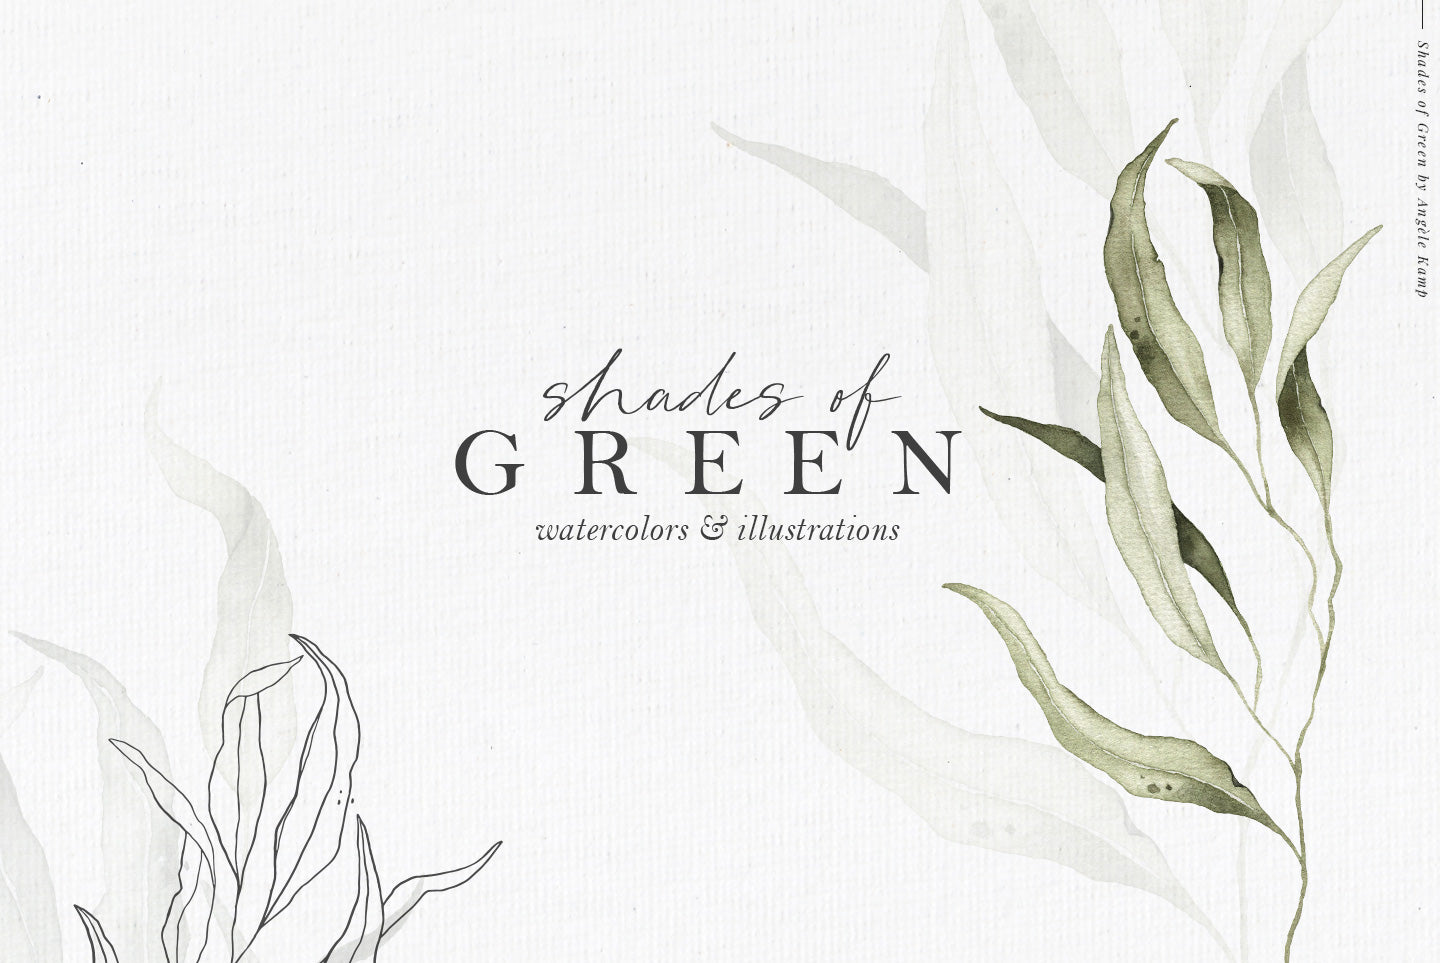 Shades of Green botanic watercolor illustrations